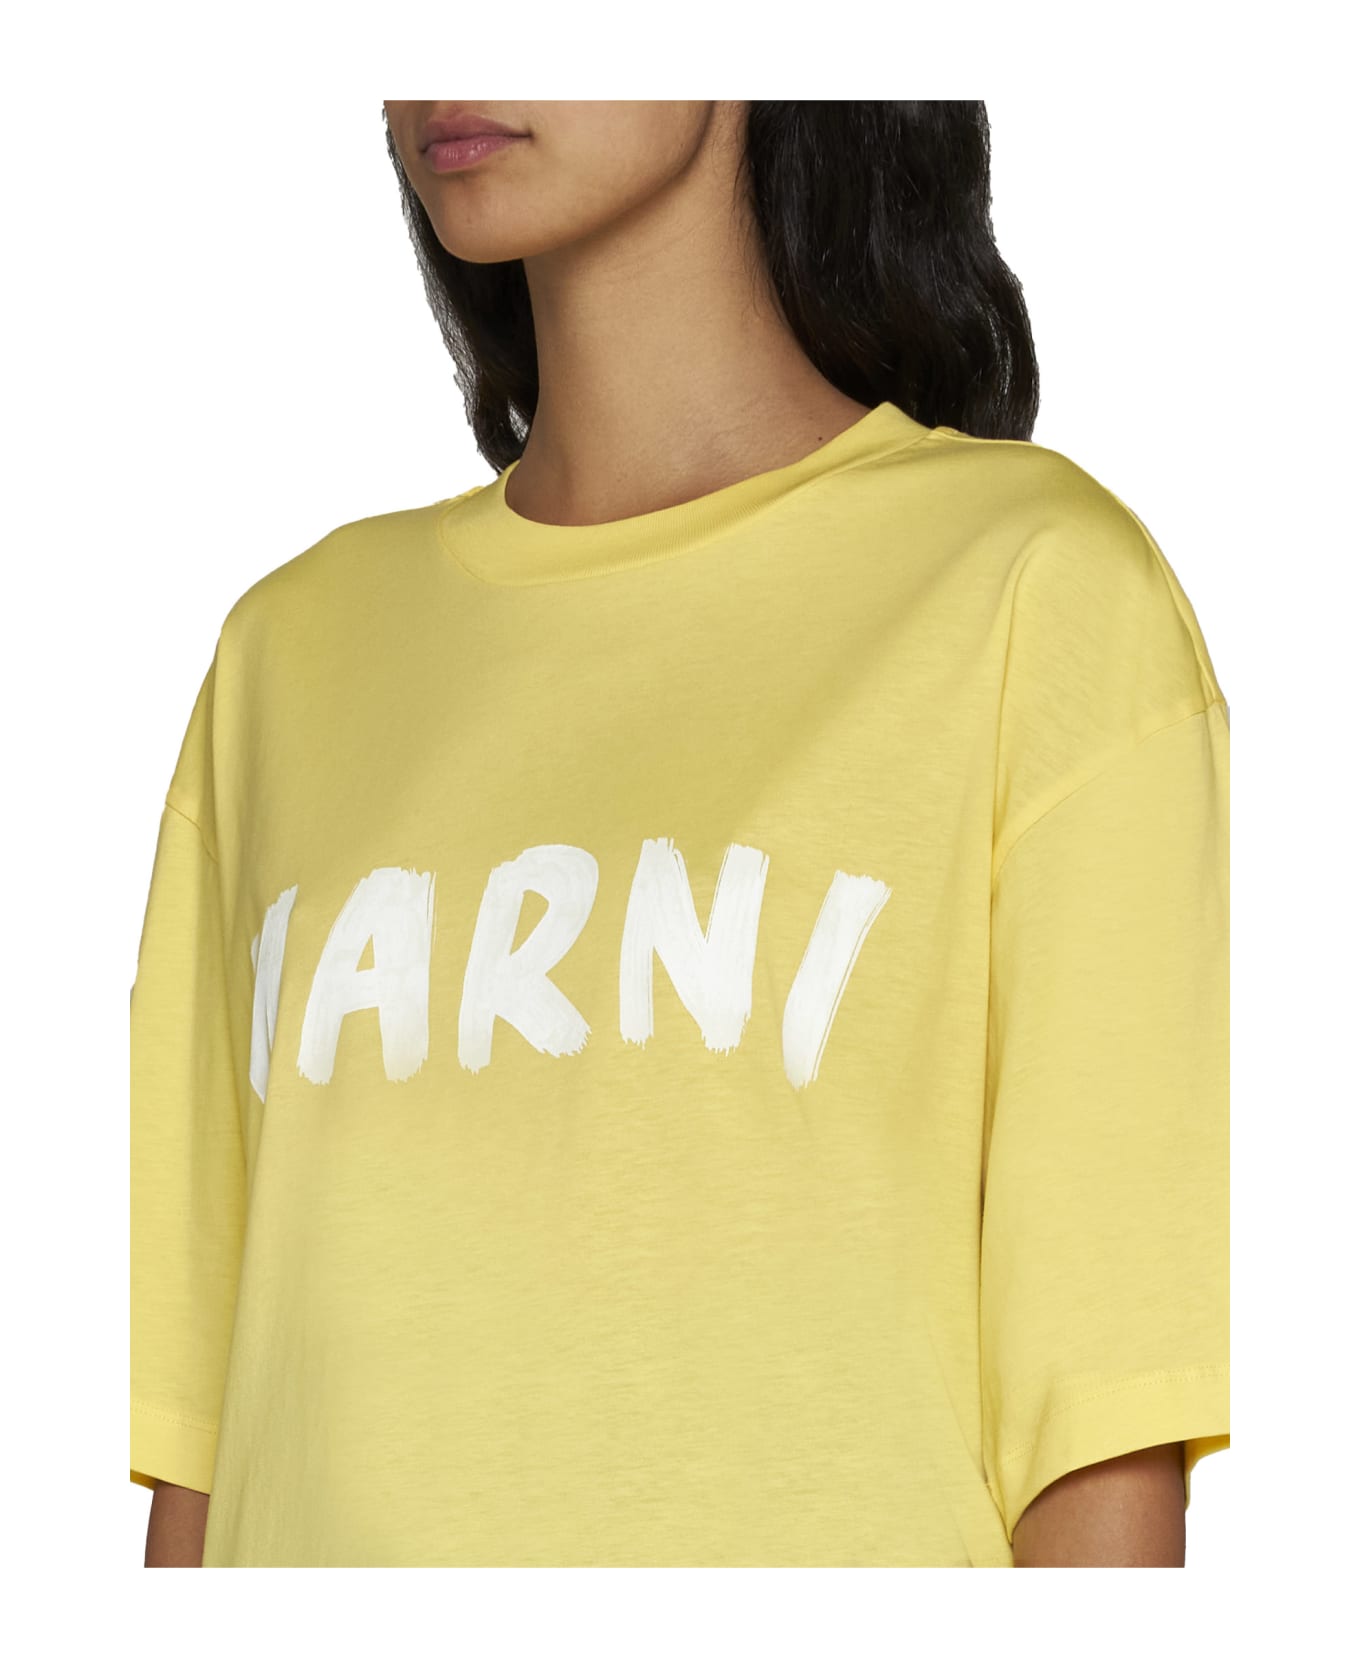 Marni T-Shirt - Lemmon Tシャツ